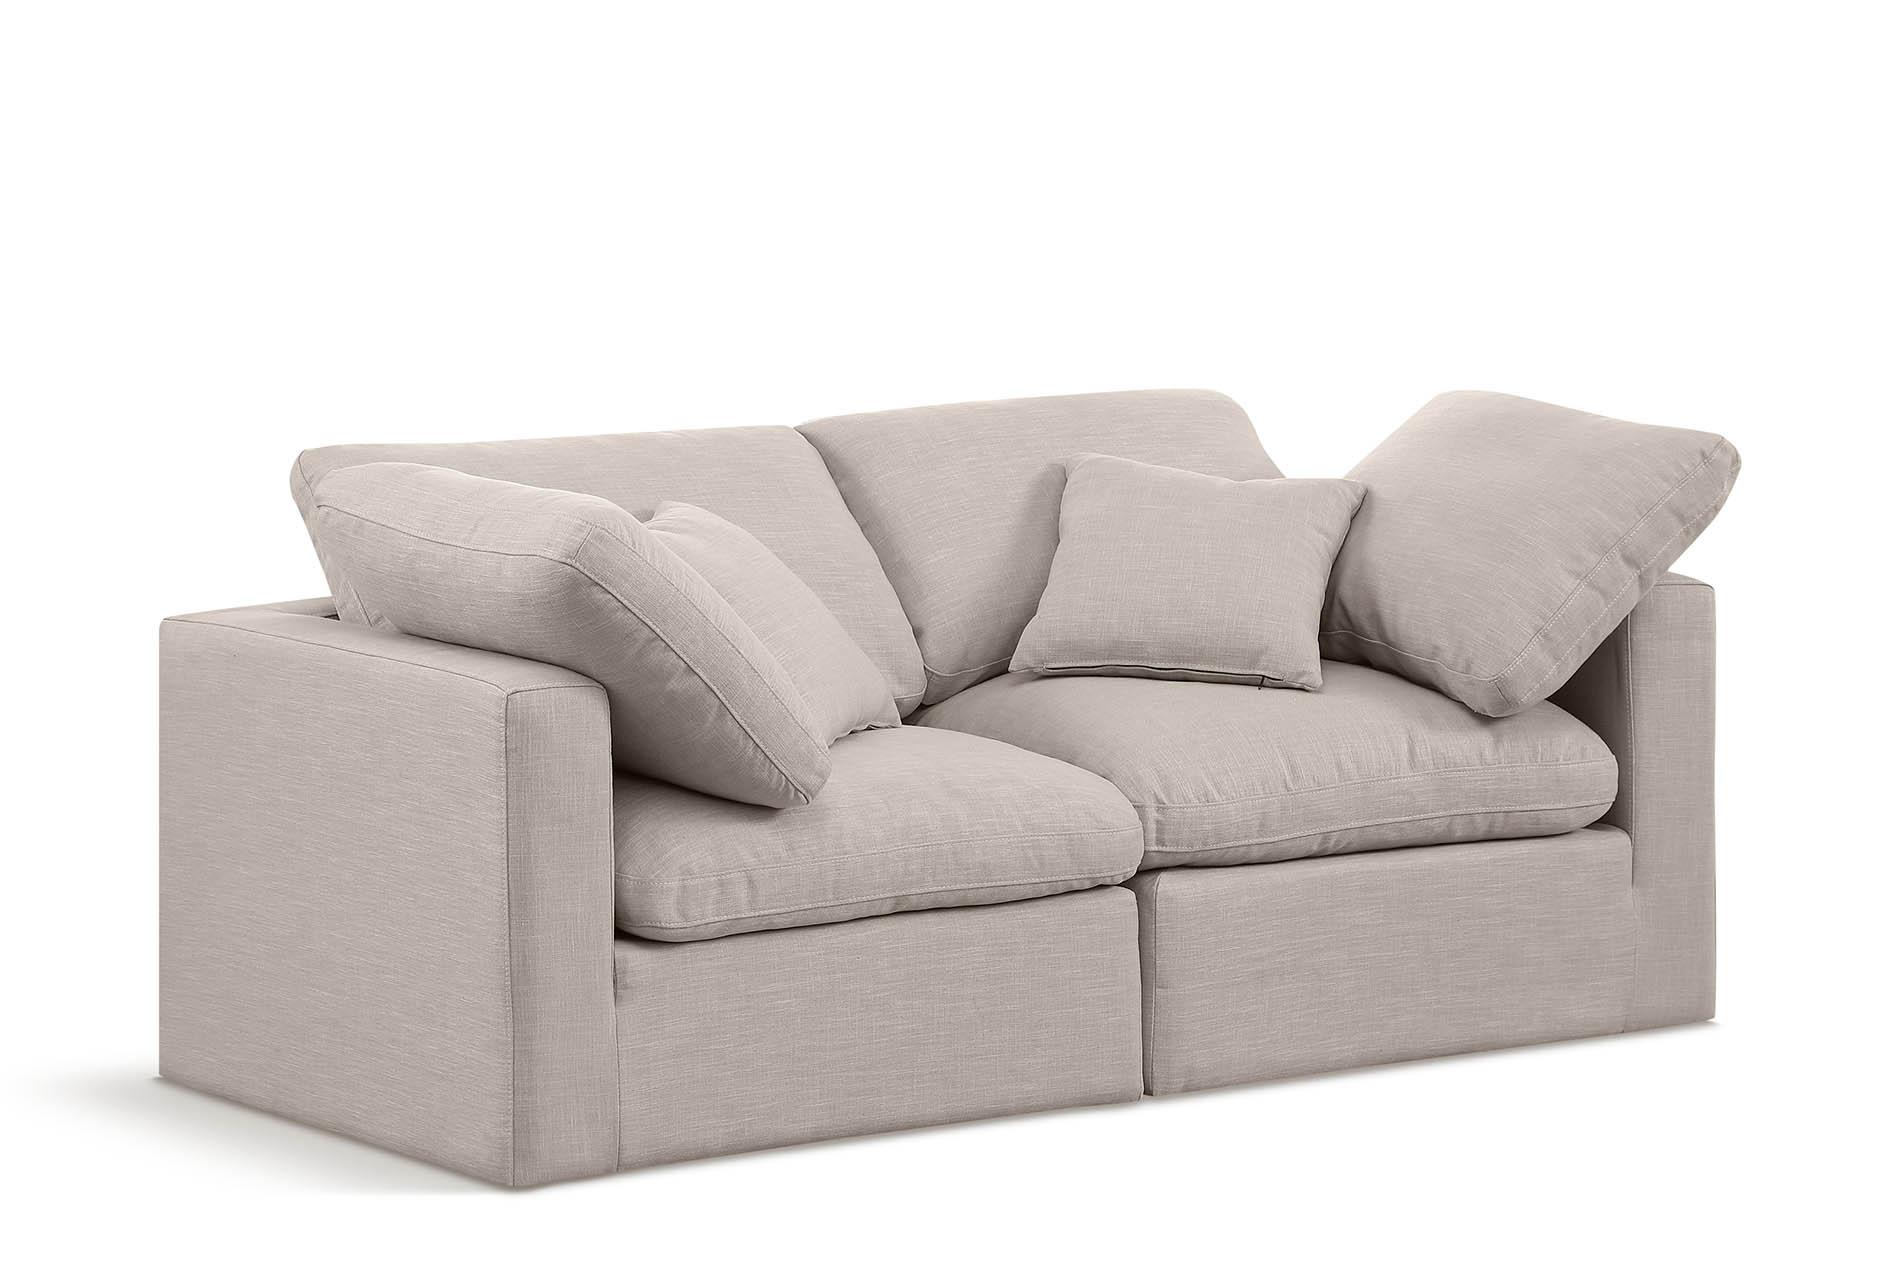 Contemporary, Modern Modular Sofa INDULGE 141Beige-S70 141Beige-S70 in Beige Linen